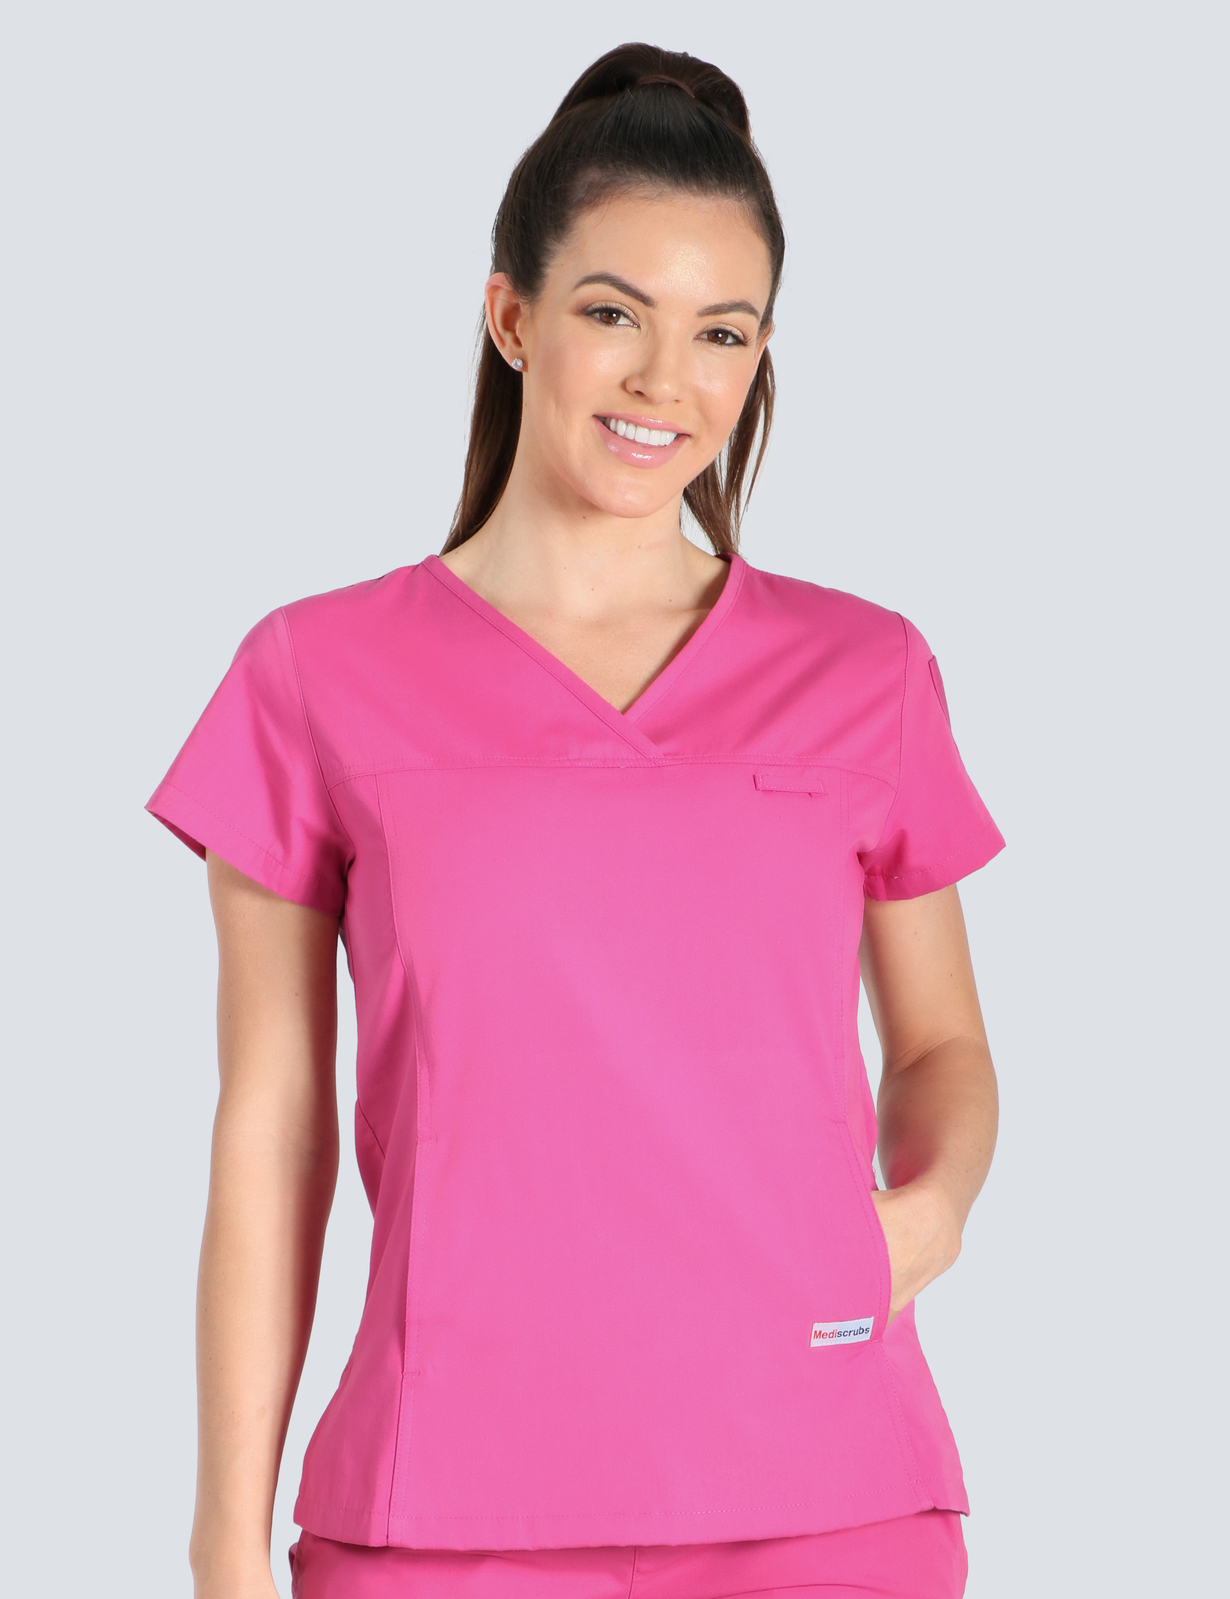 Queensland Children's Hospital Emergency Department Clinical Facilitator Uniform Top Bundle  (Women's Fit Top in Pink incl Logos)